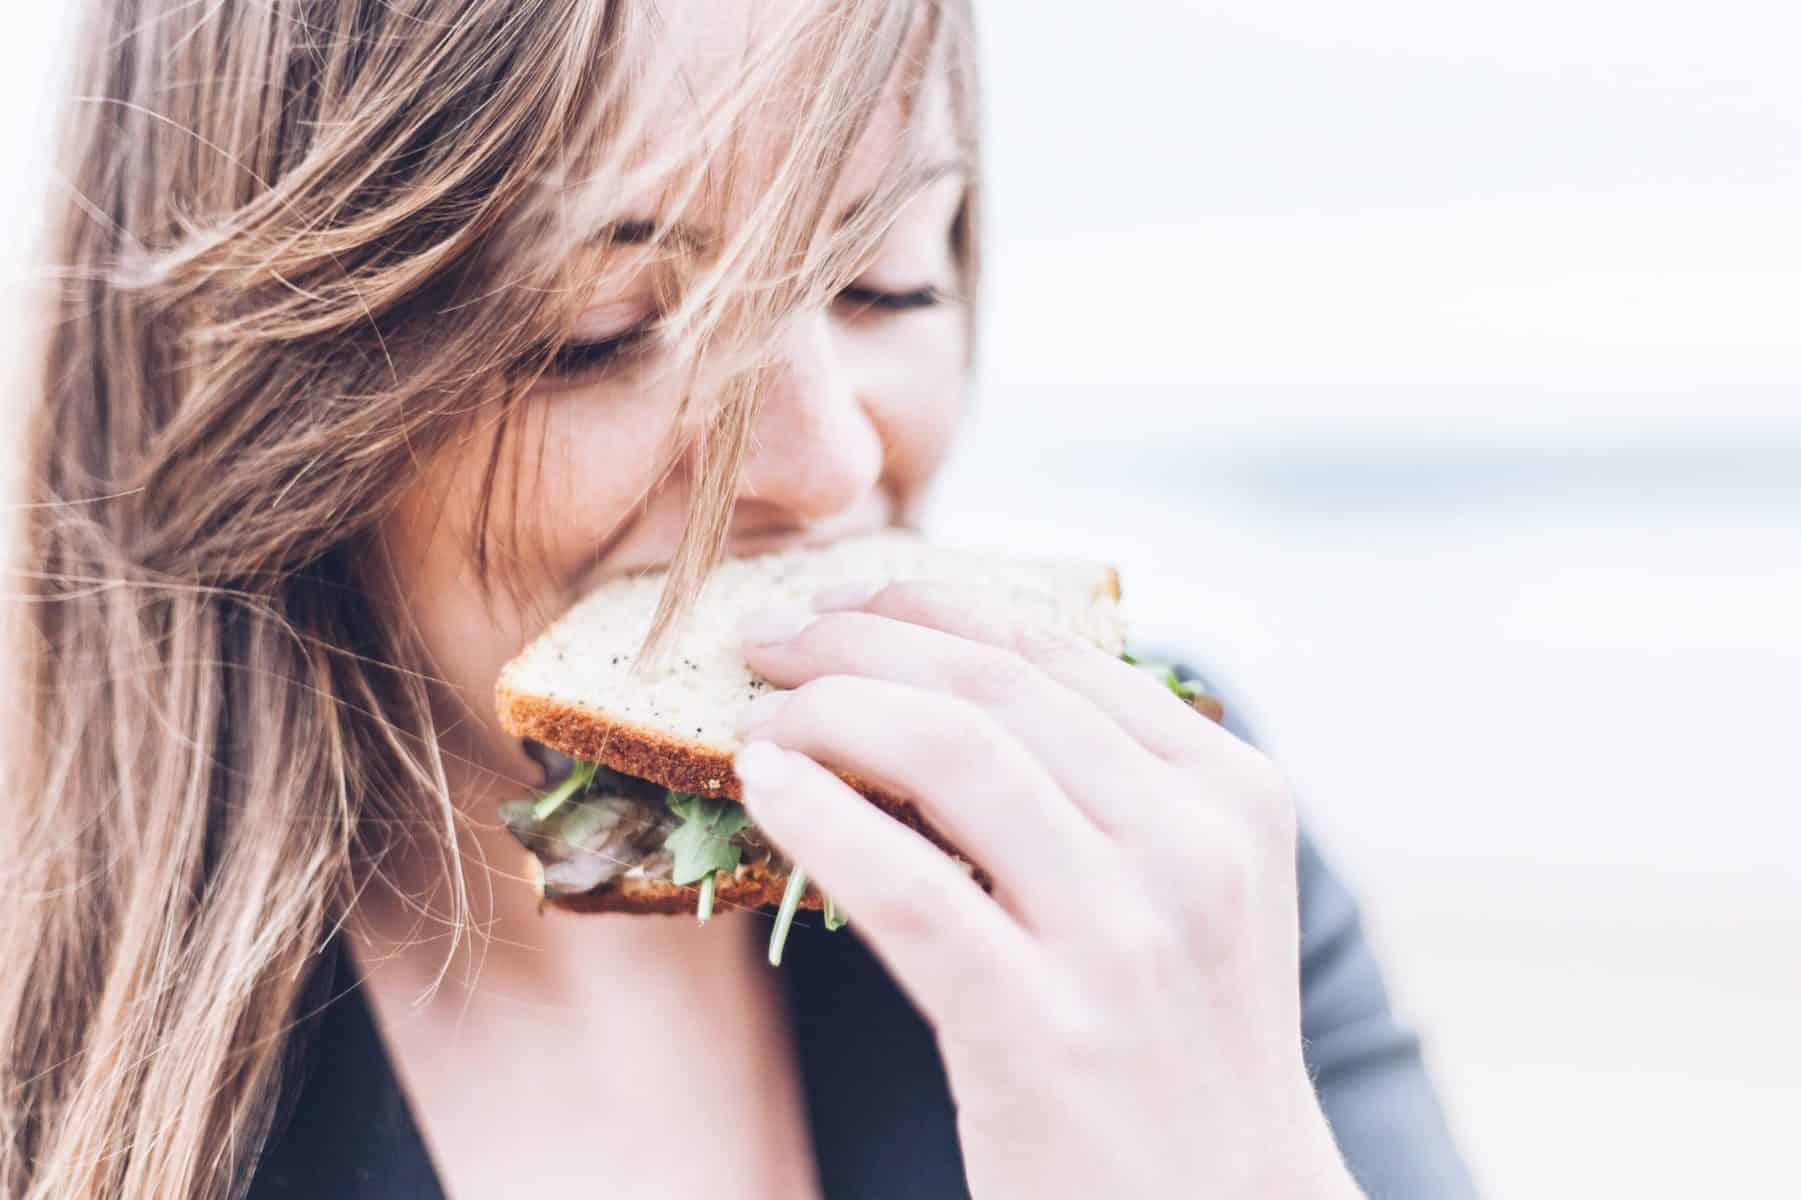 A woman eating a sandwich